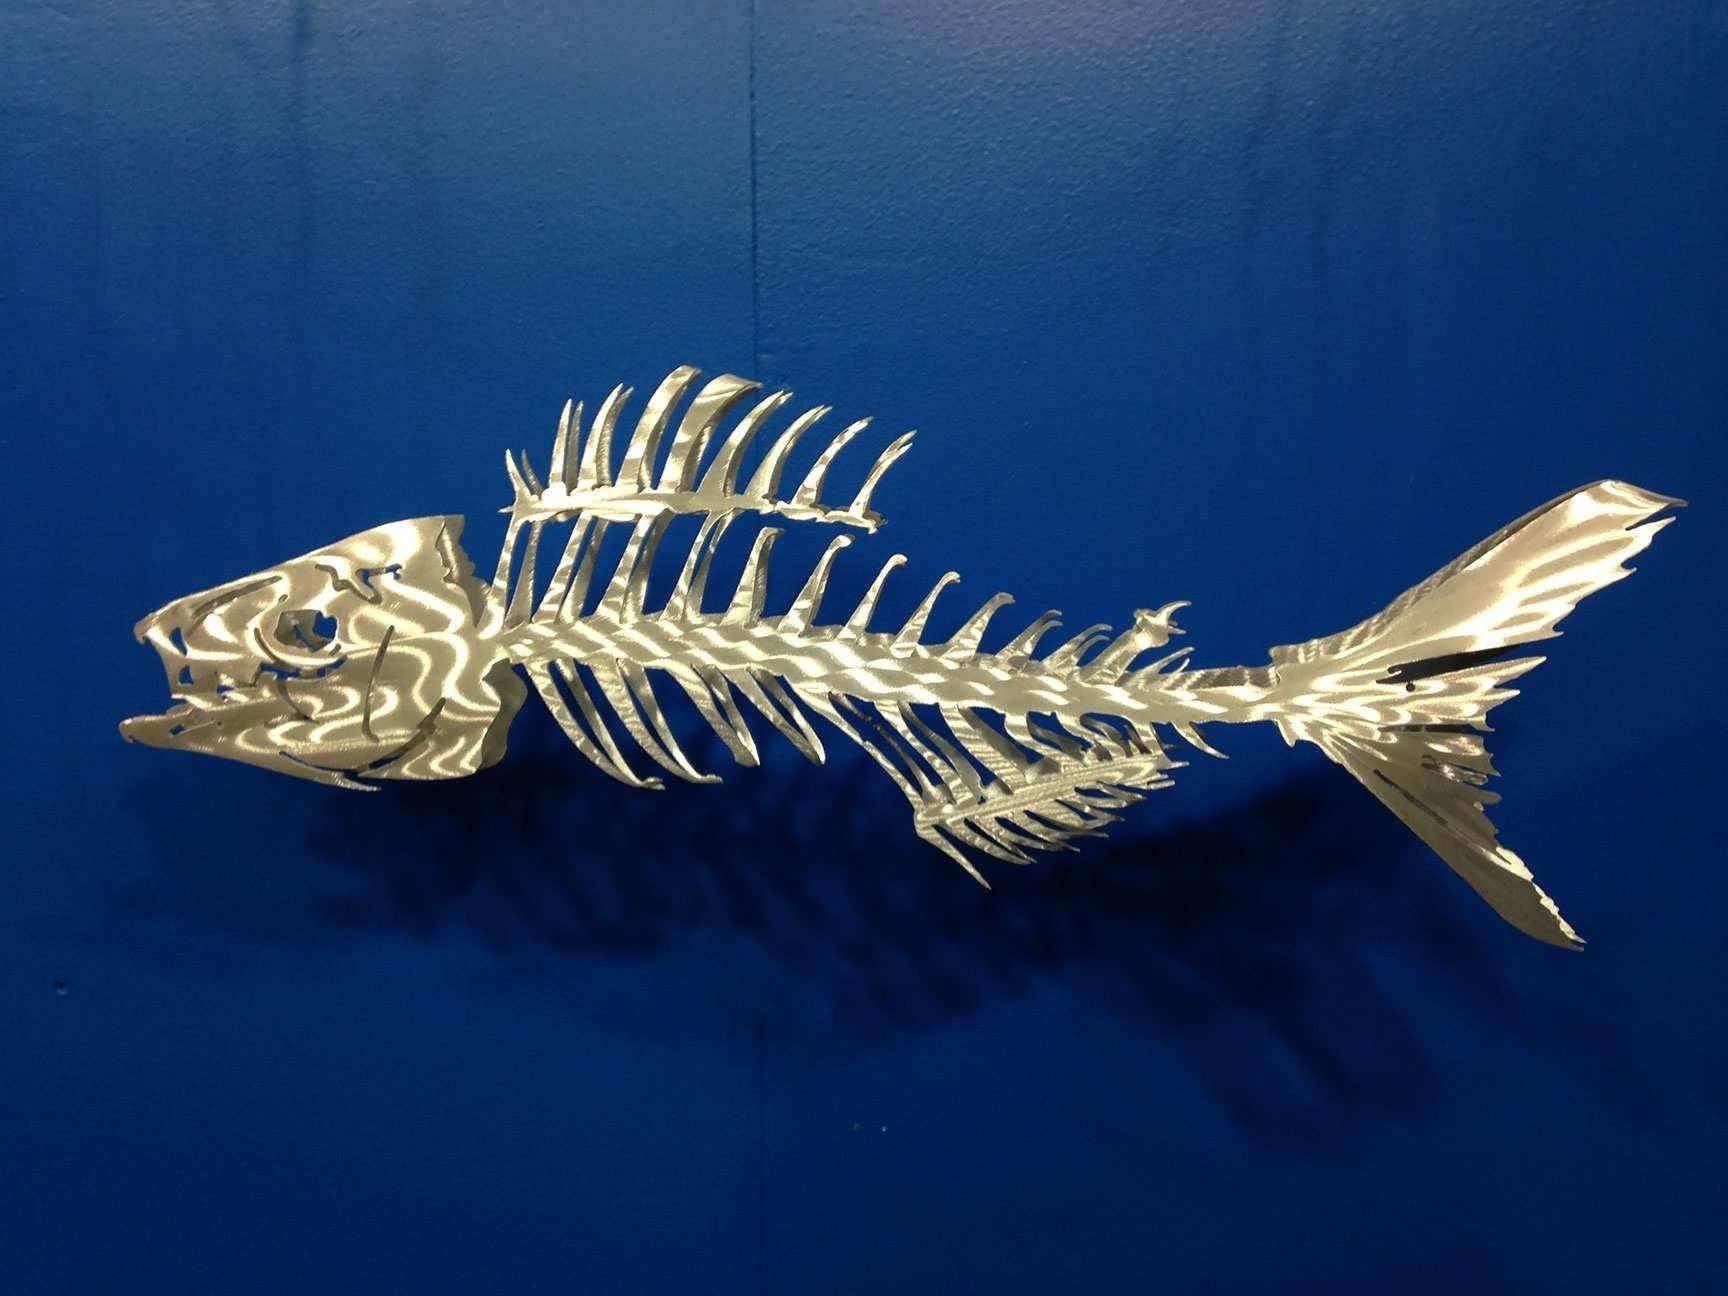 3 Dfishbone With Regard To Fish Bone Wall Art (View 15 of 20)